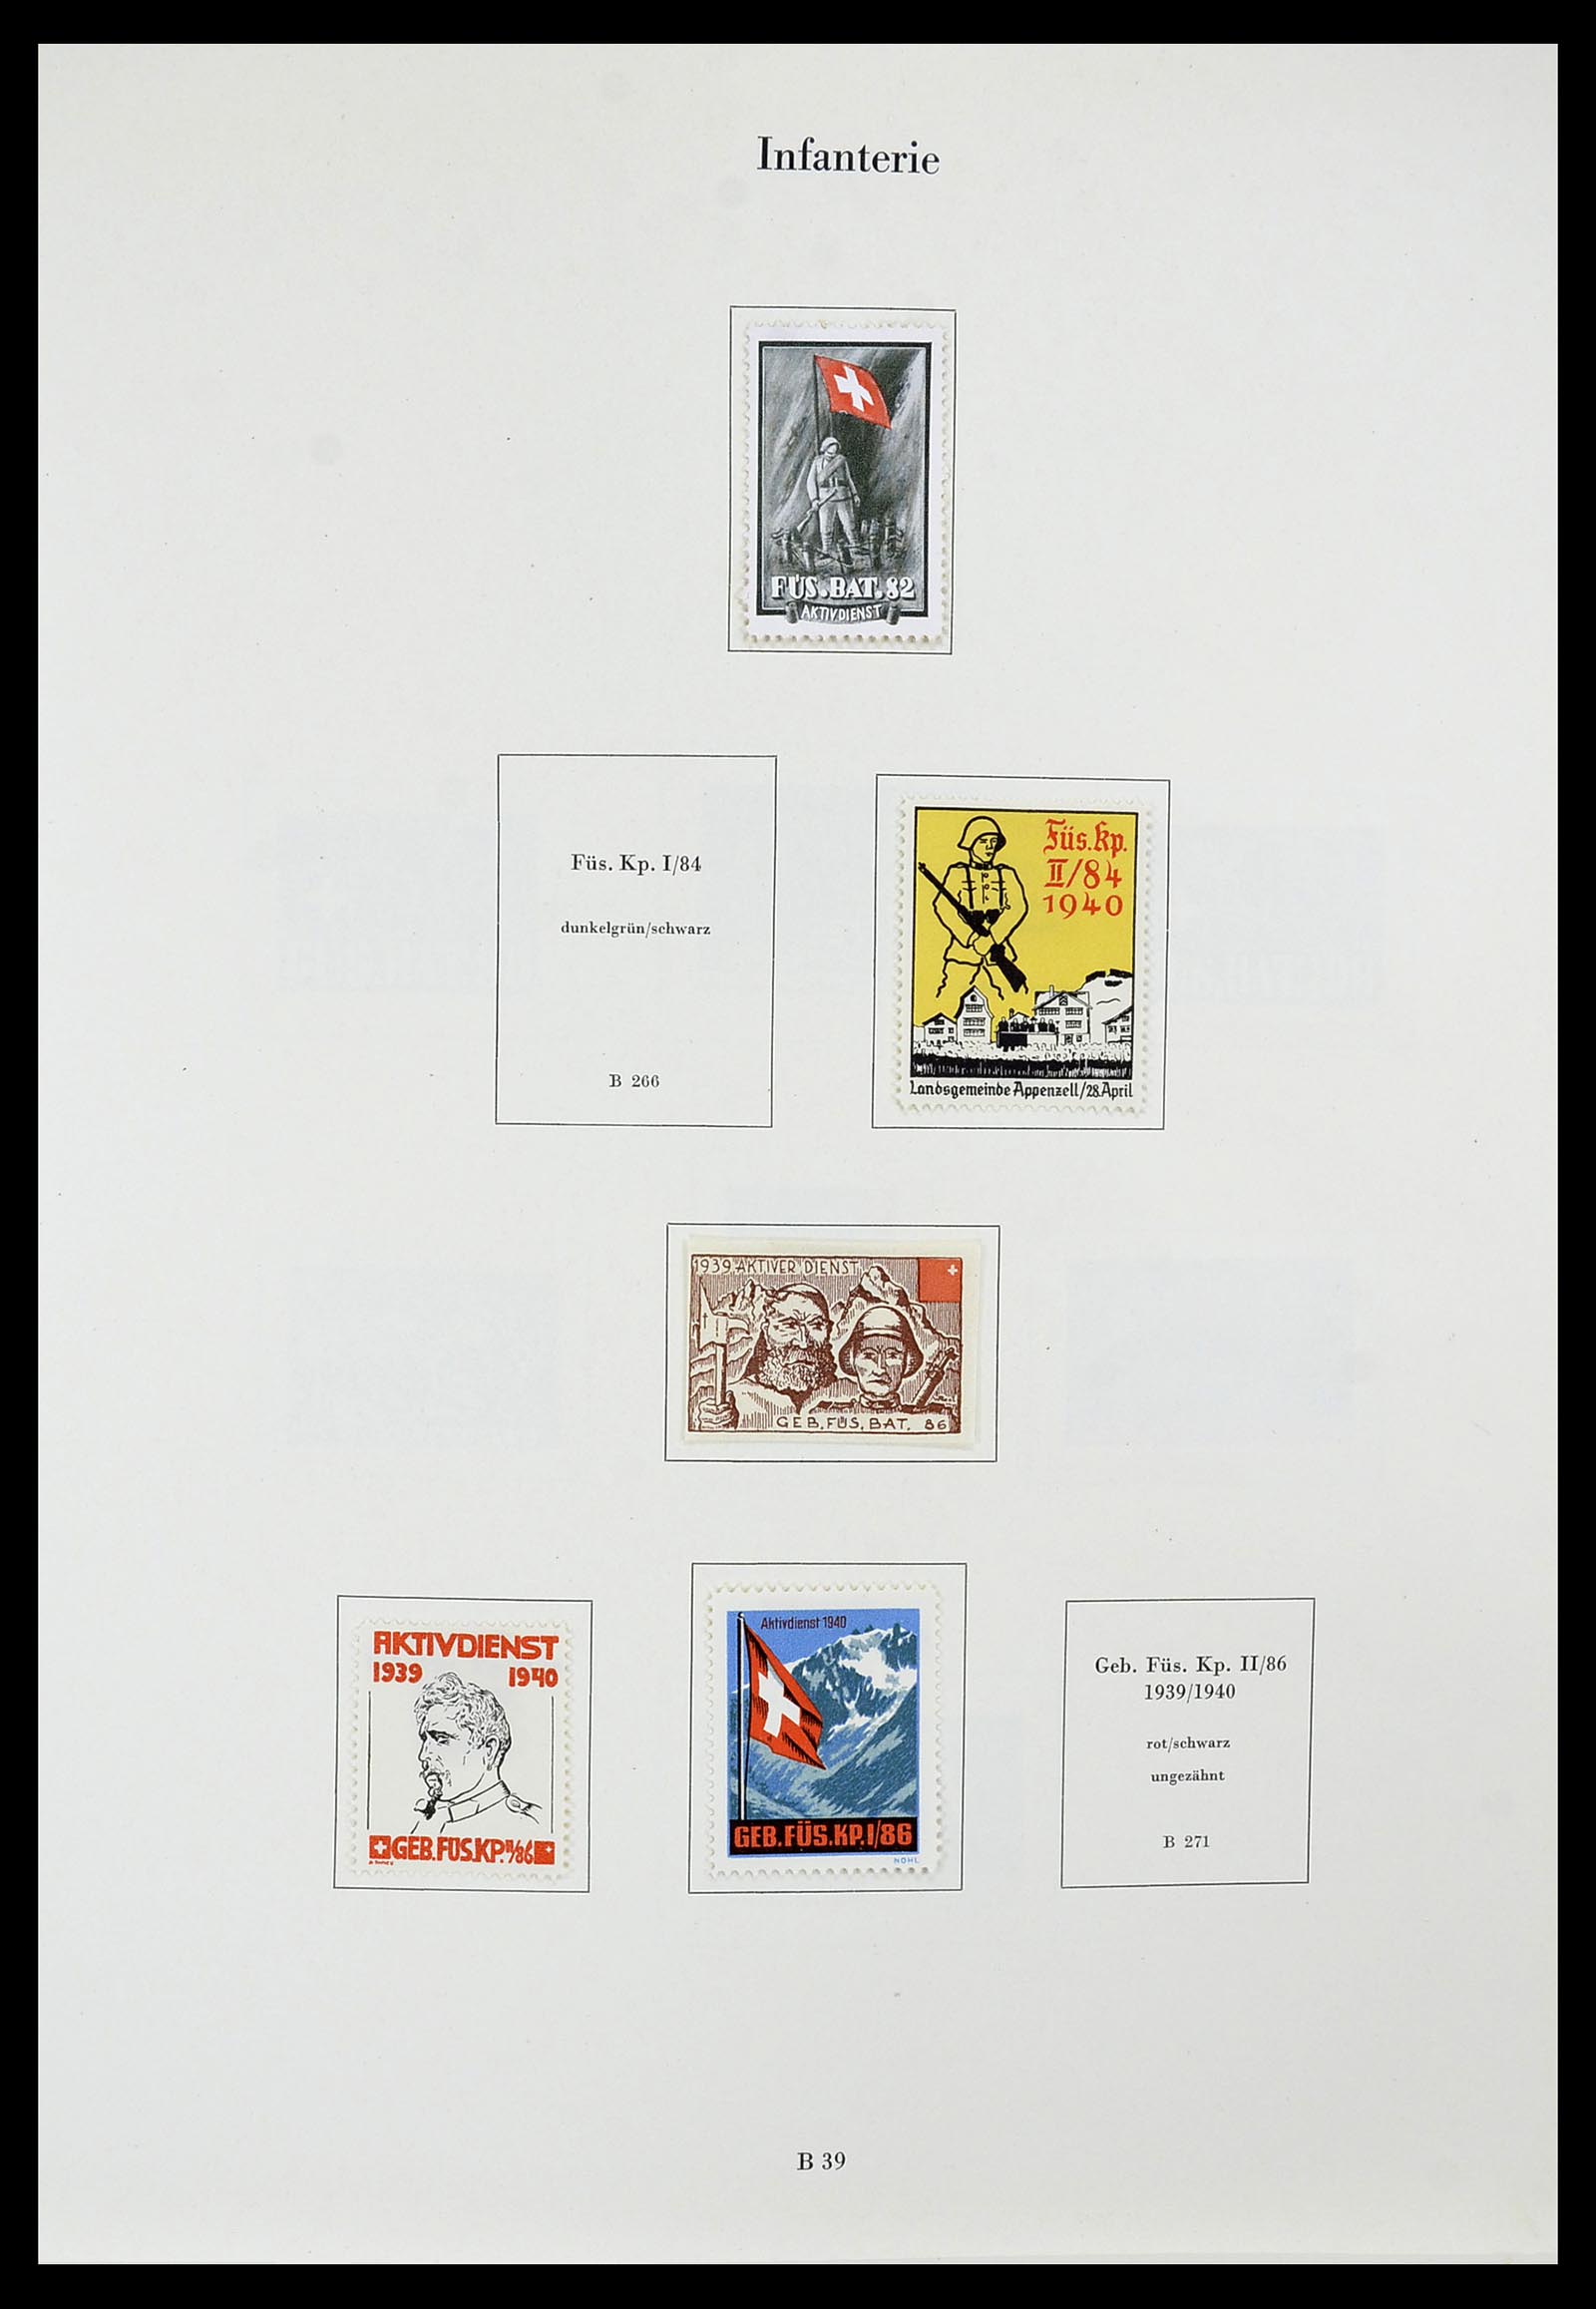 34234 064 - Stamp collection 34234 Switzerland soldier stamps 1939-1945.